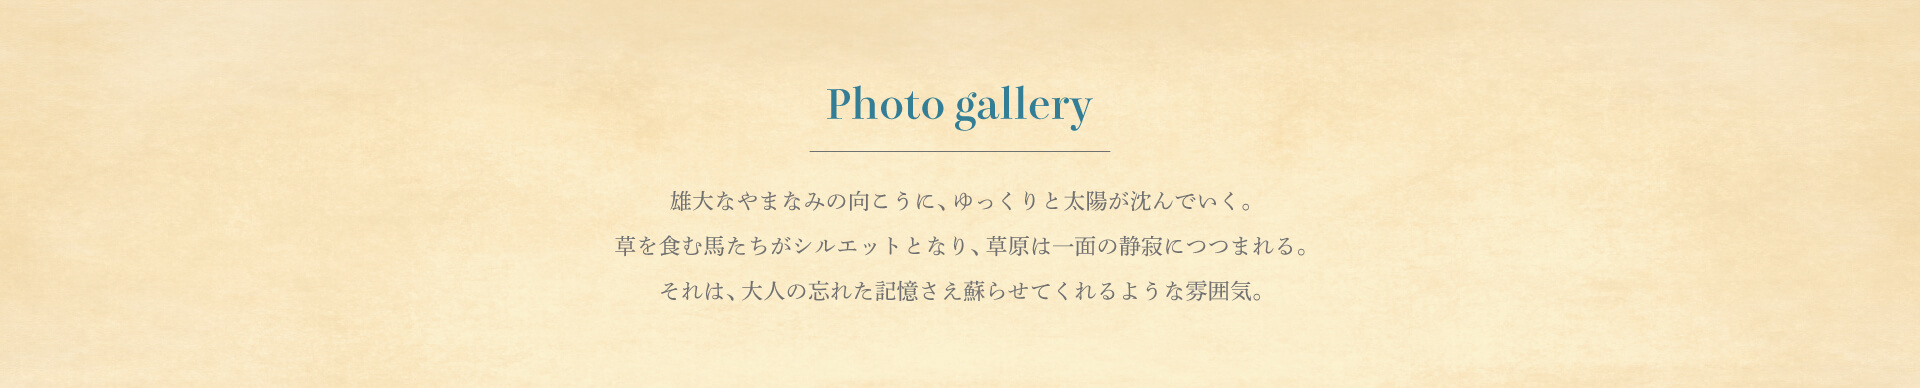 photo gallery